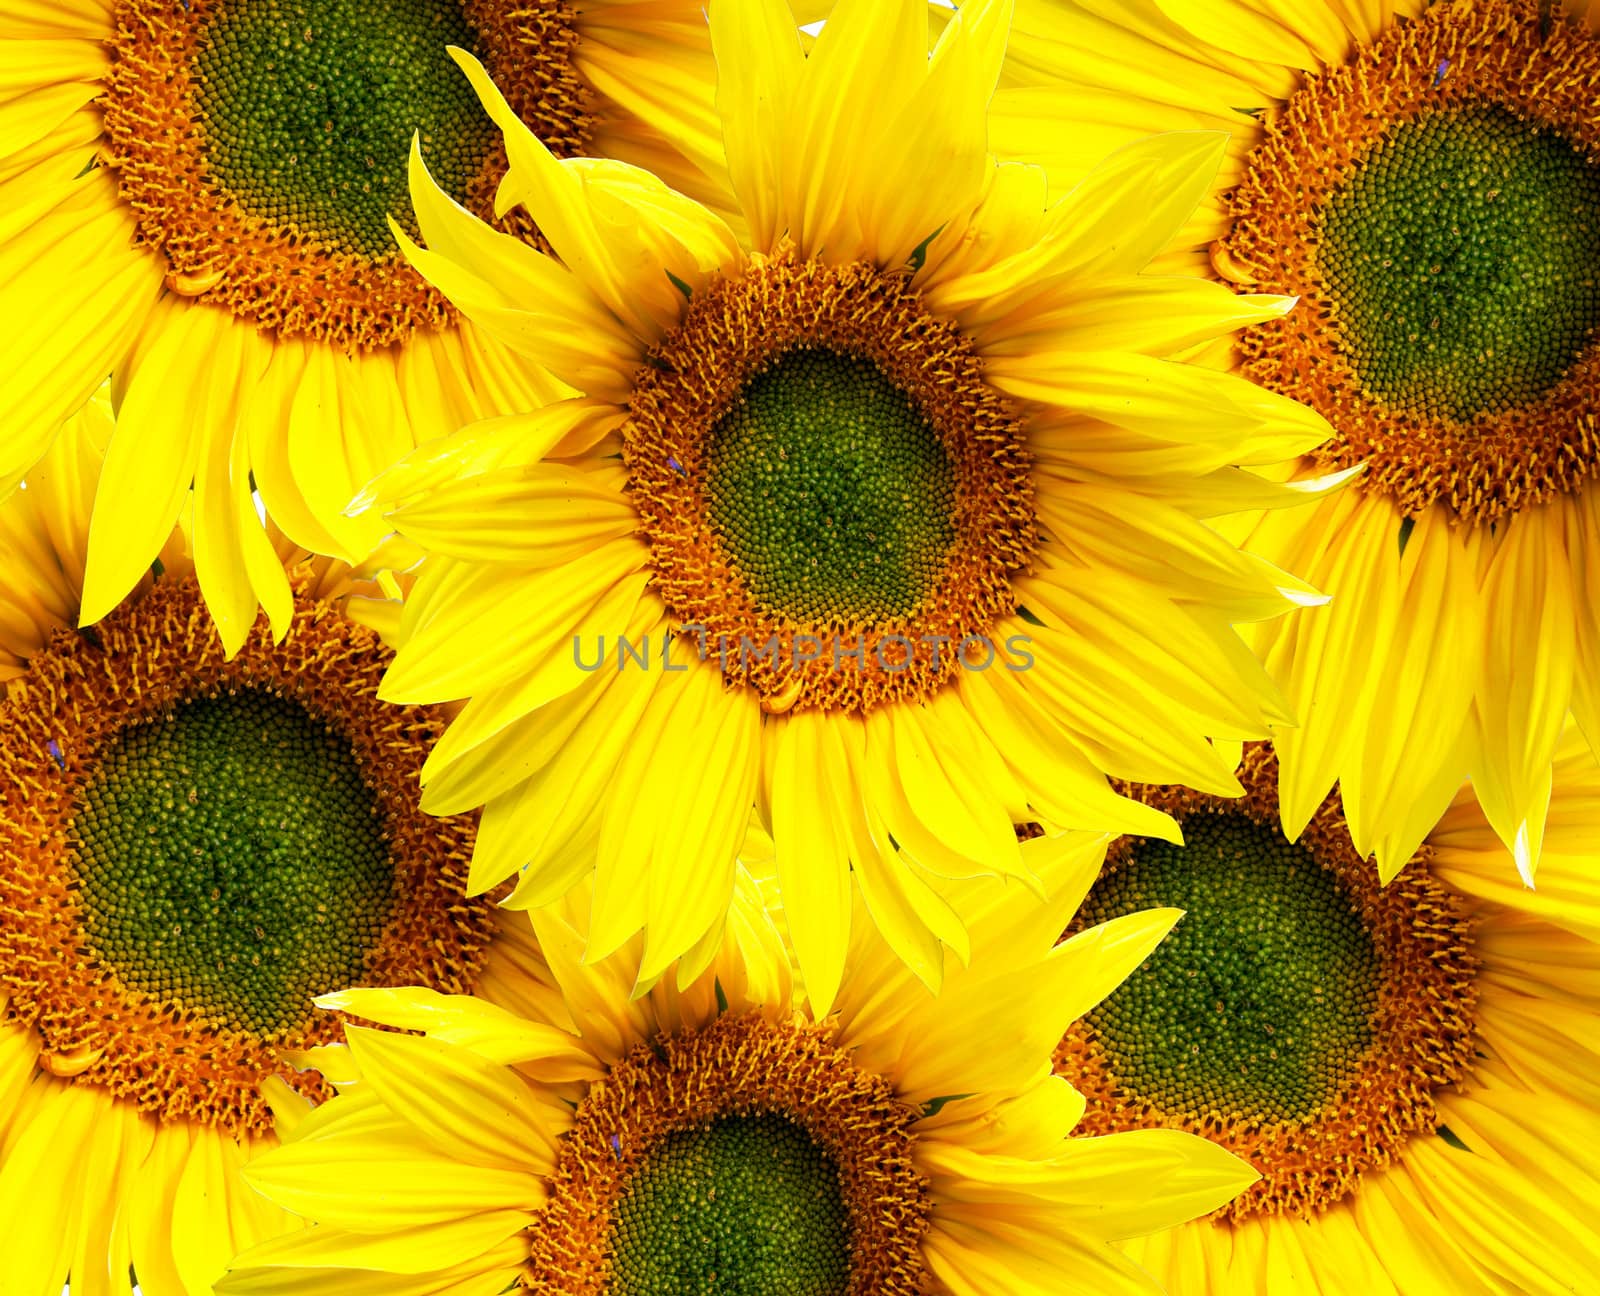 Sunflower background. by cobol1964